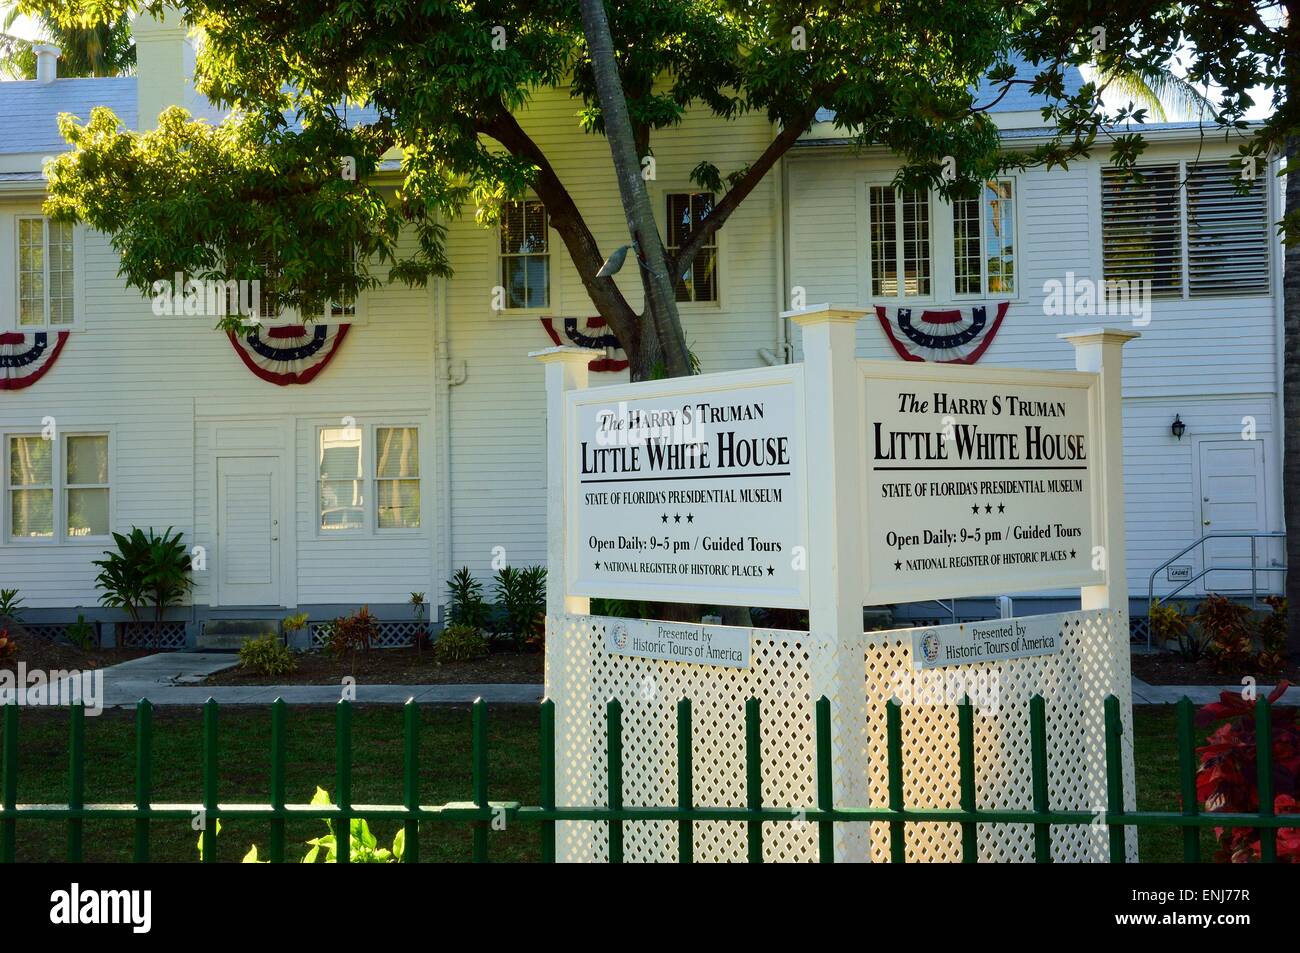 The Harry S Truman Little White House. Key West. Florida Keys. USA Stock Photo